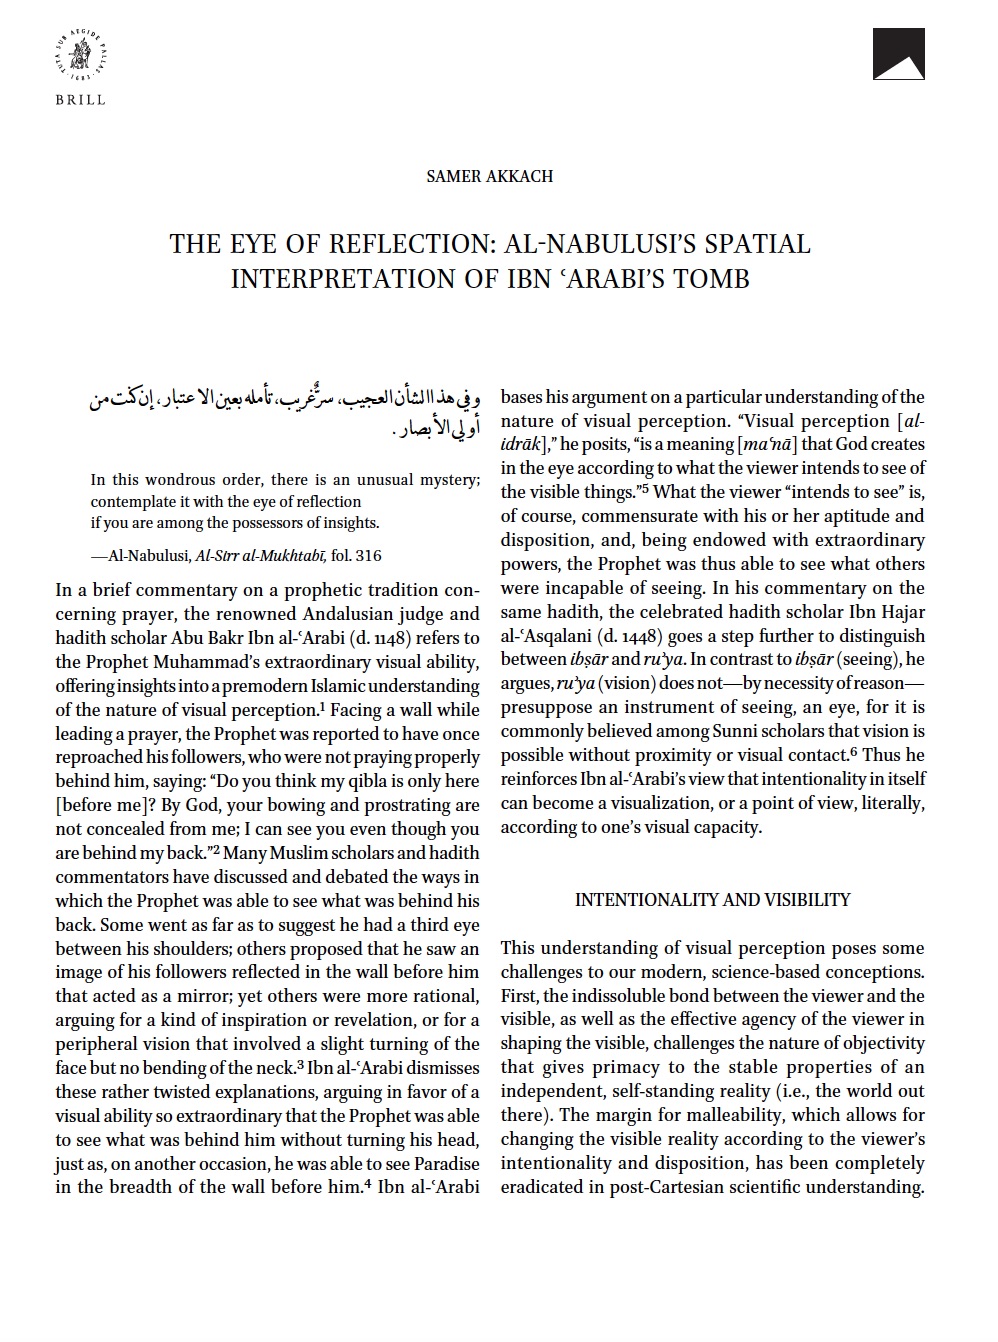 The Eye of Reflection: Al-Nabulusi’s Spatial Interpretation of Ibn ʿArabi’s Tomb